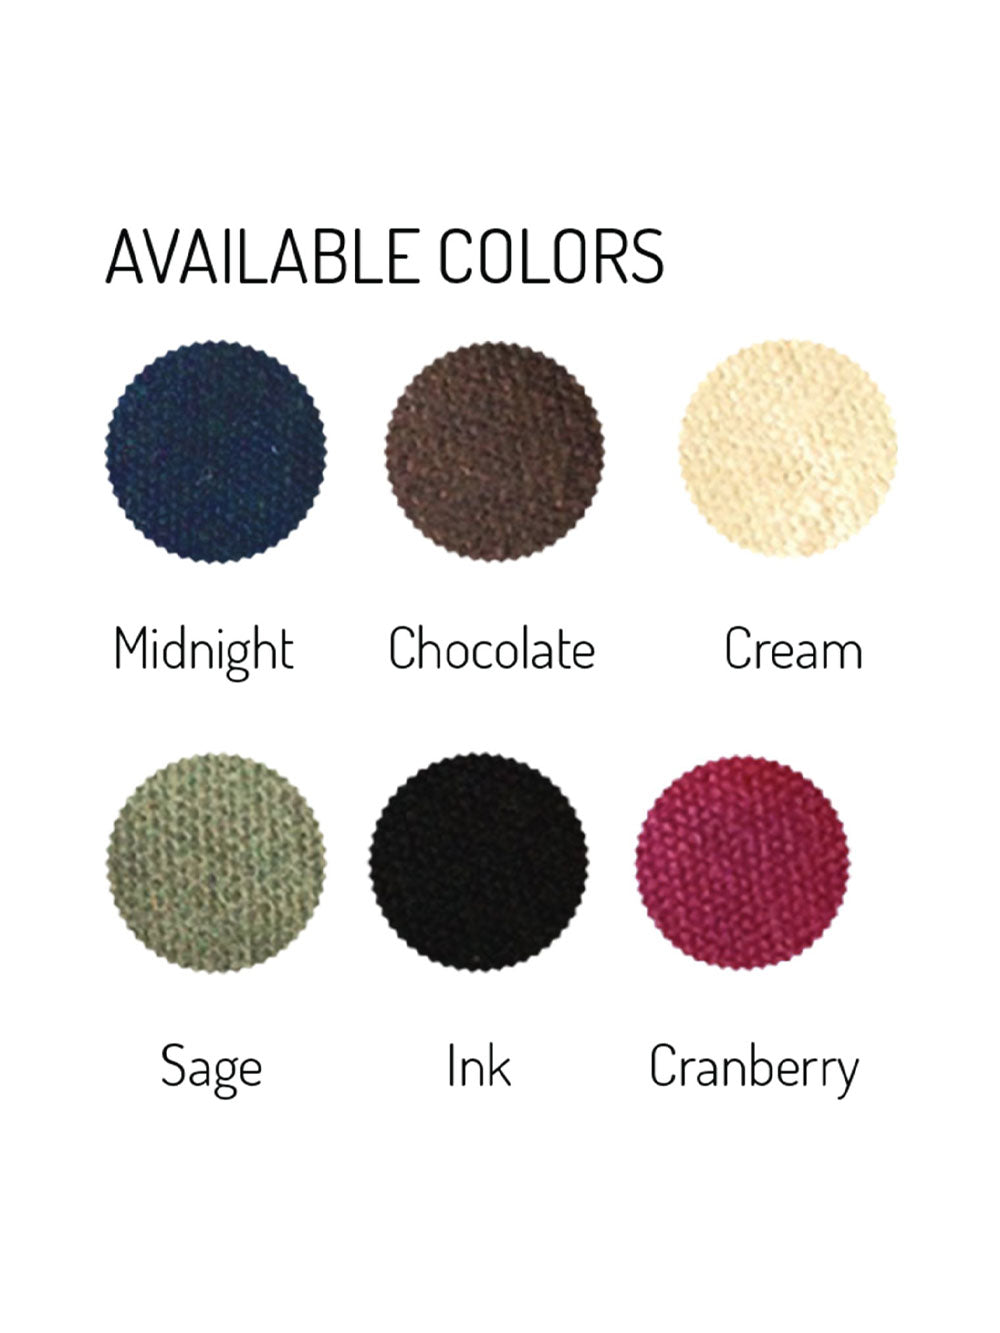 swatches of waxed canvas: dark blue, dark brown, cream, sage green, black, and cranberry red